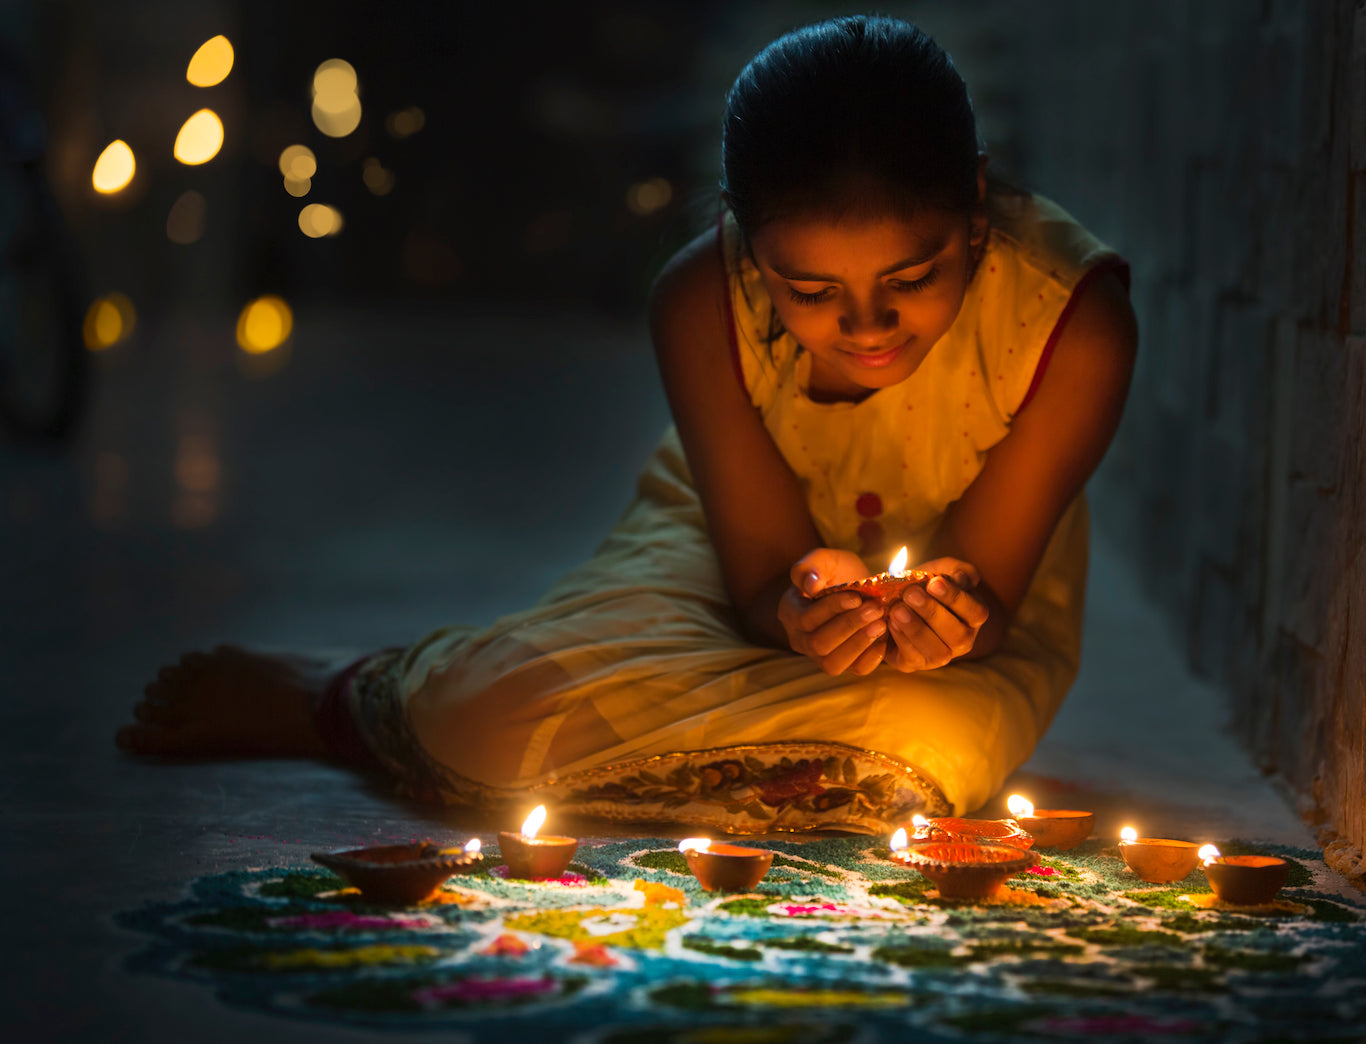 Diwali facts for children learn about Rangoli Patterns, Diya lamps, Lakshm,i and Rama and Sita